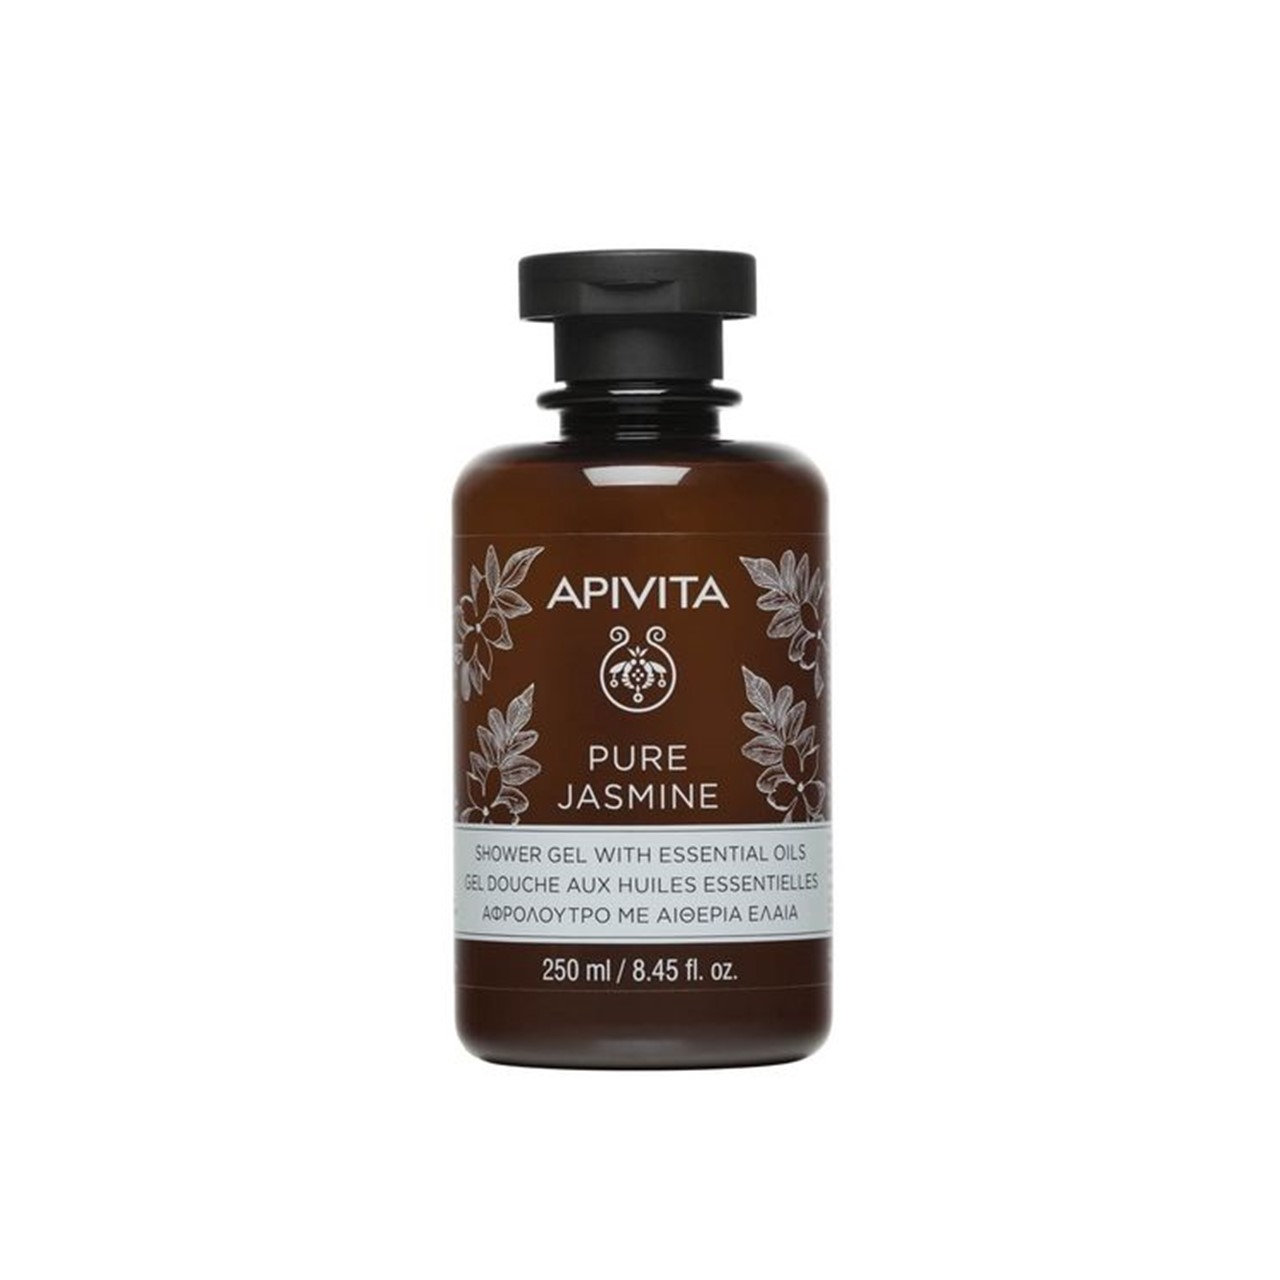 APIVITA Pure Jasmine Shower Gel Essential Oils 250ml